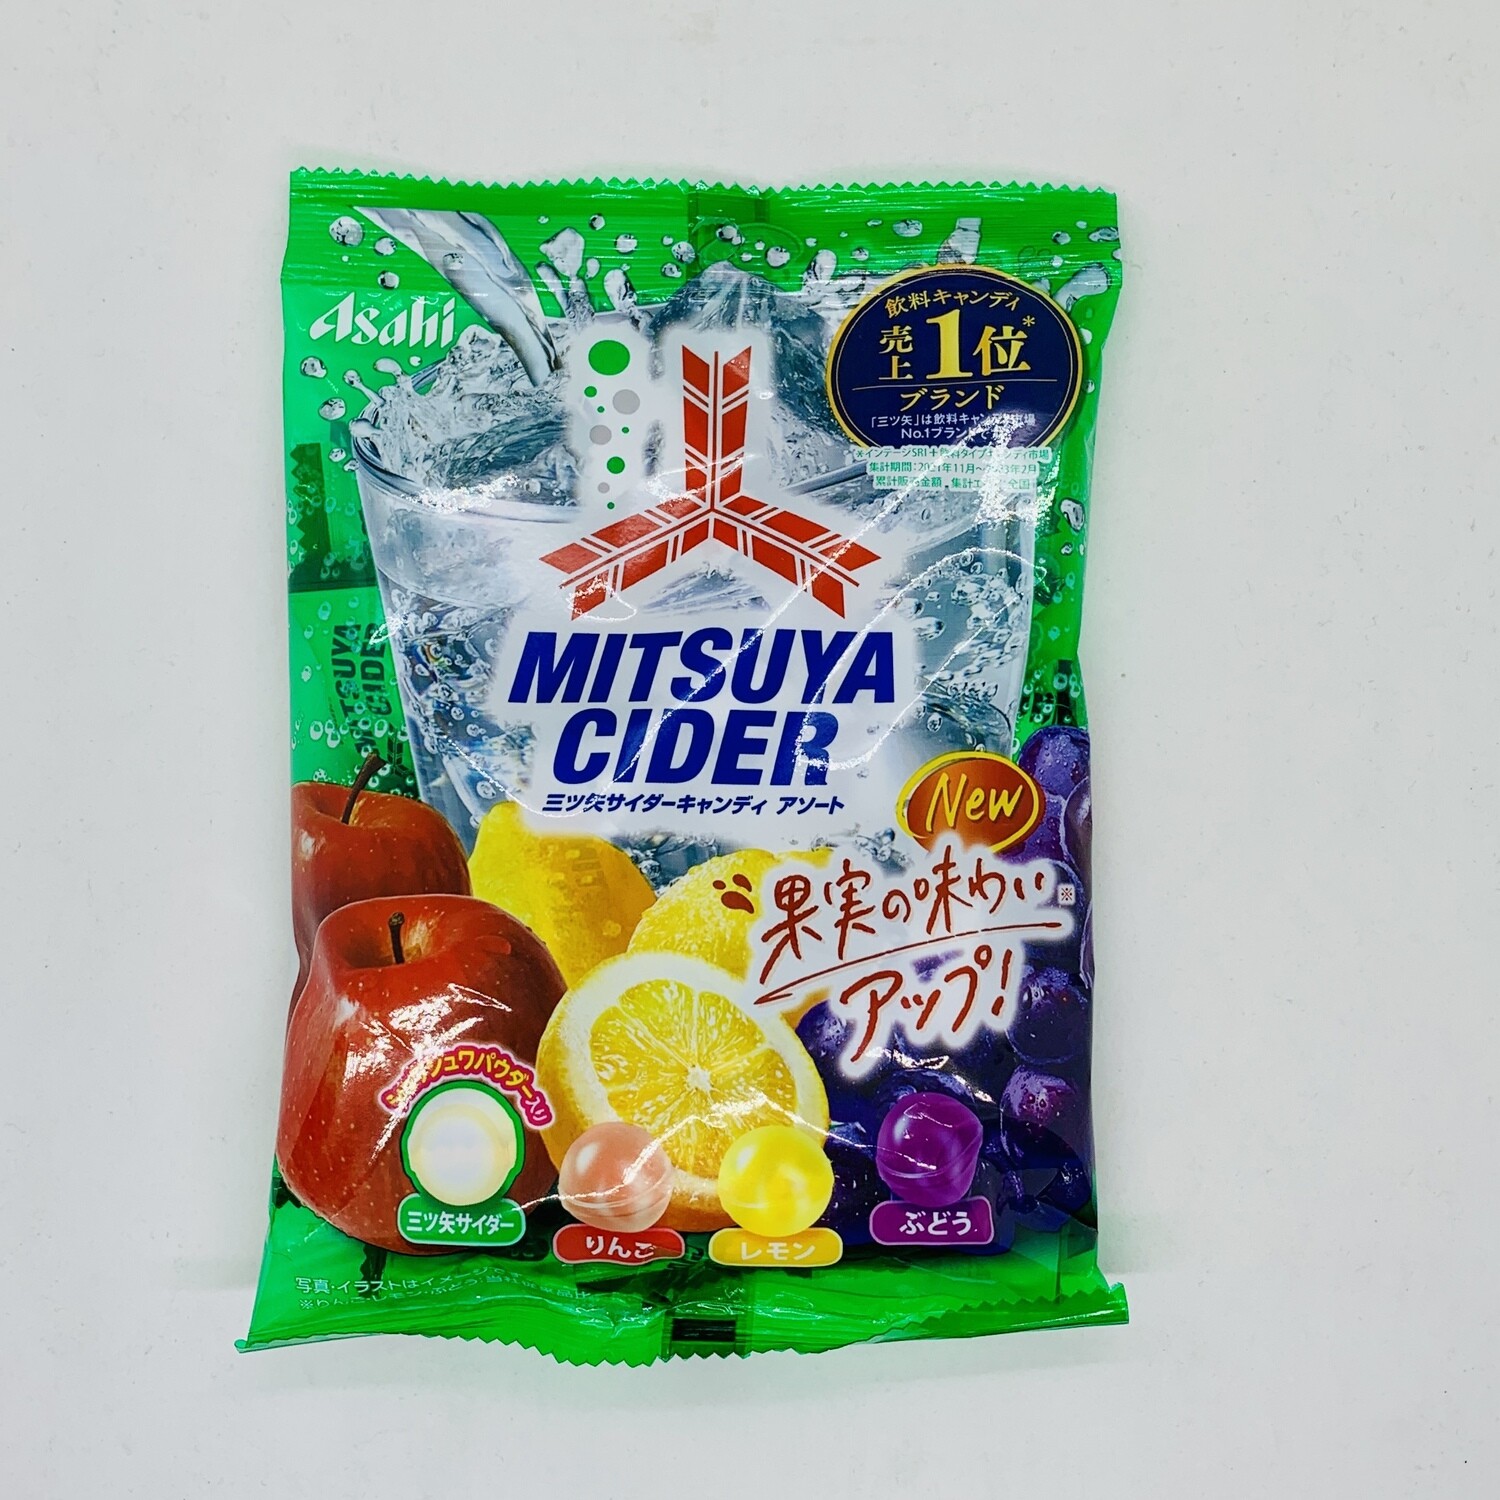 ASAHI Mitsuya Cider Candy Fruits